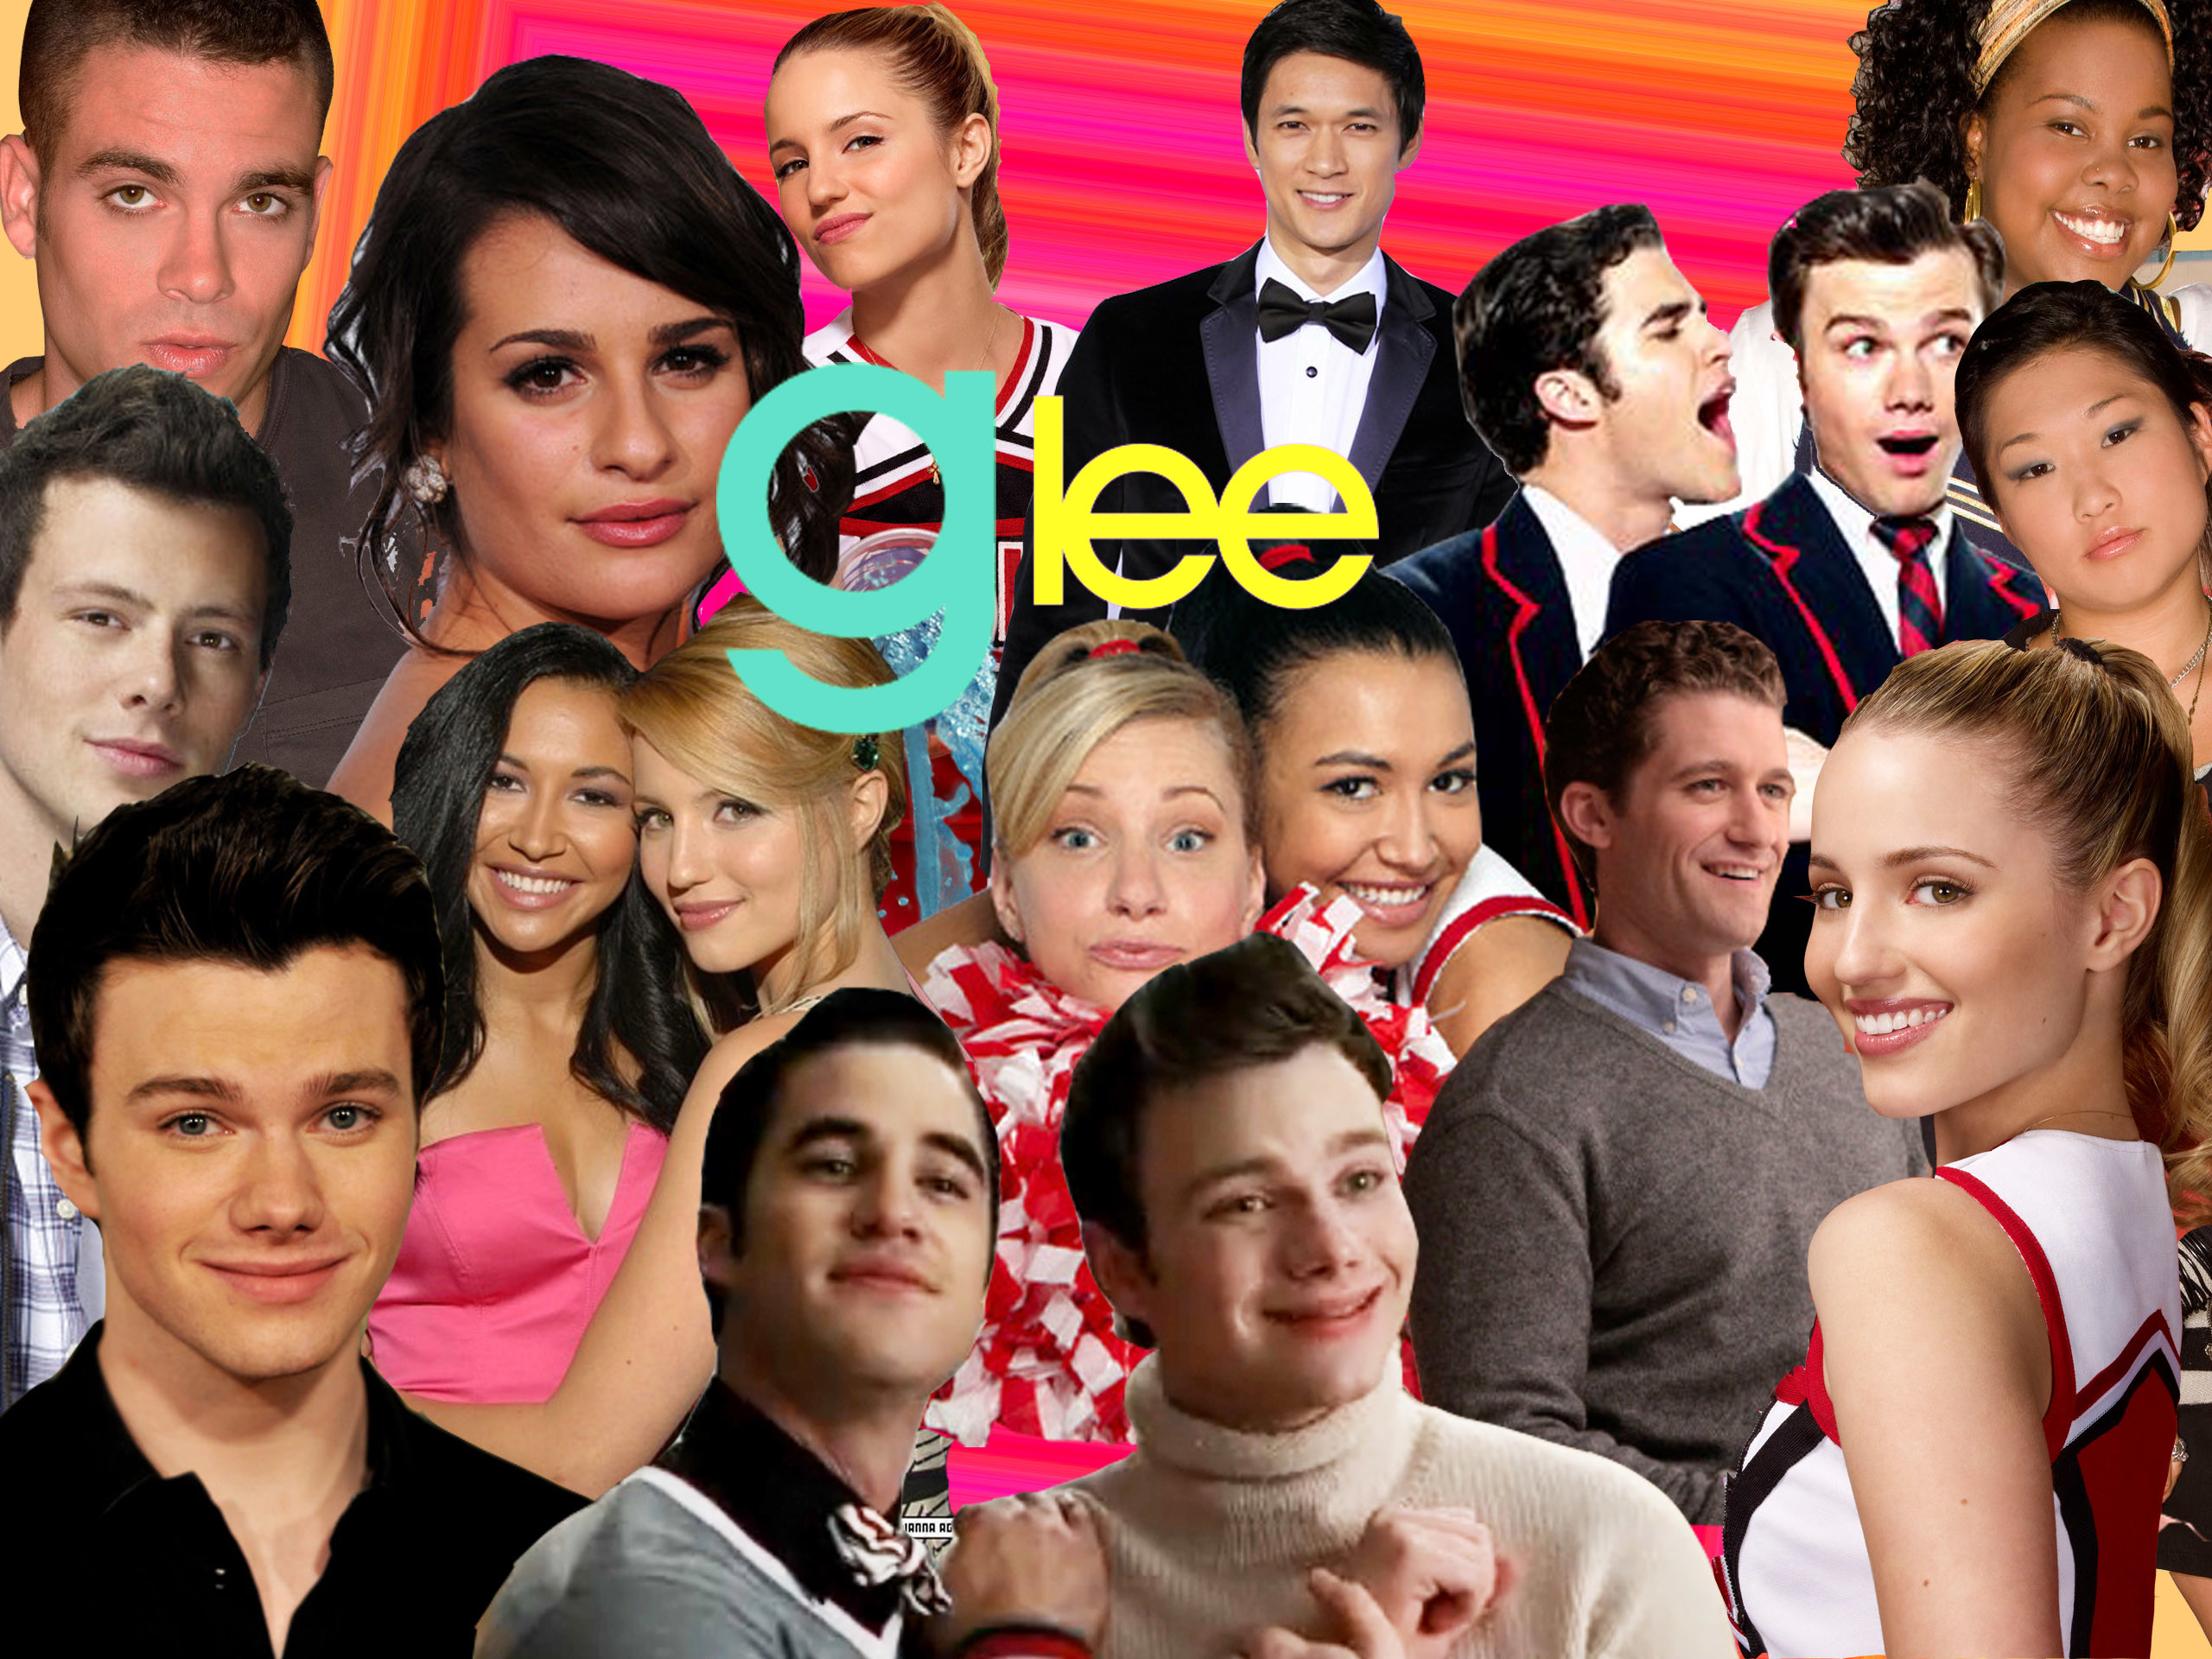 2560x1920 Darren Criss images Glee wallpaper HD wallpaper and background photos